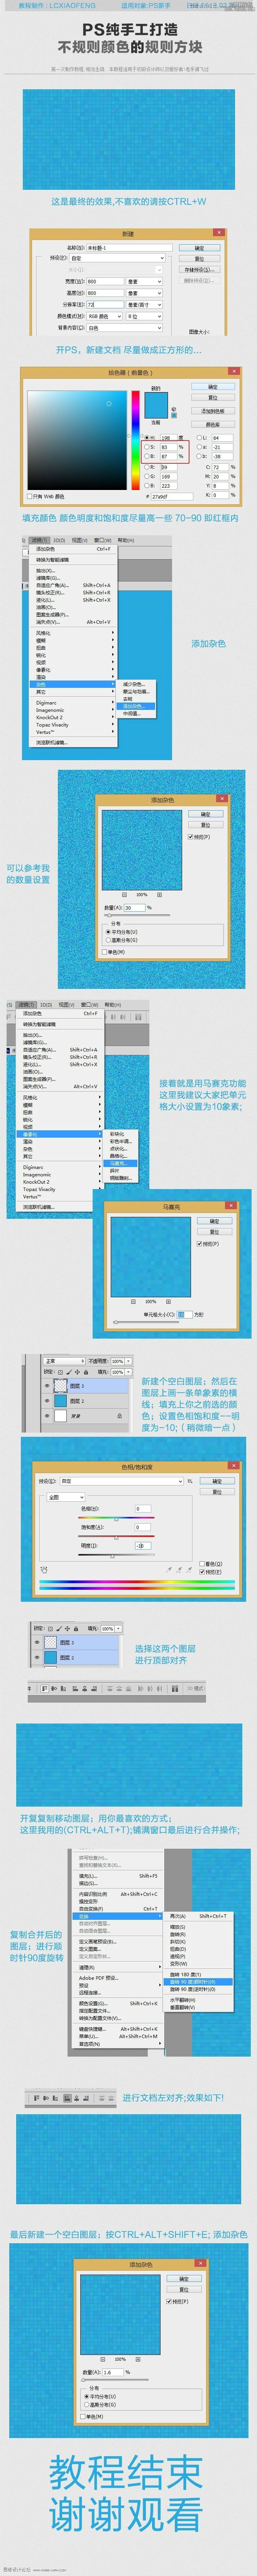 Photoshop手工制作精美的格子背景教程,PS教程,16xx8.com教程网